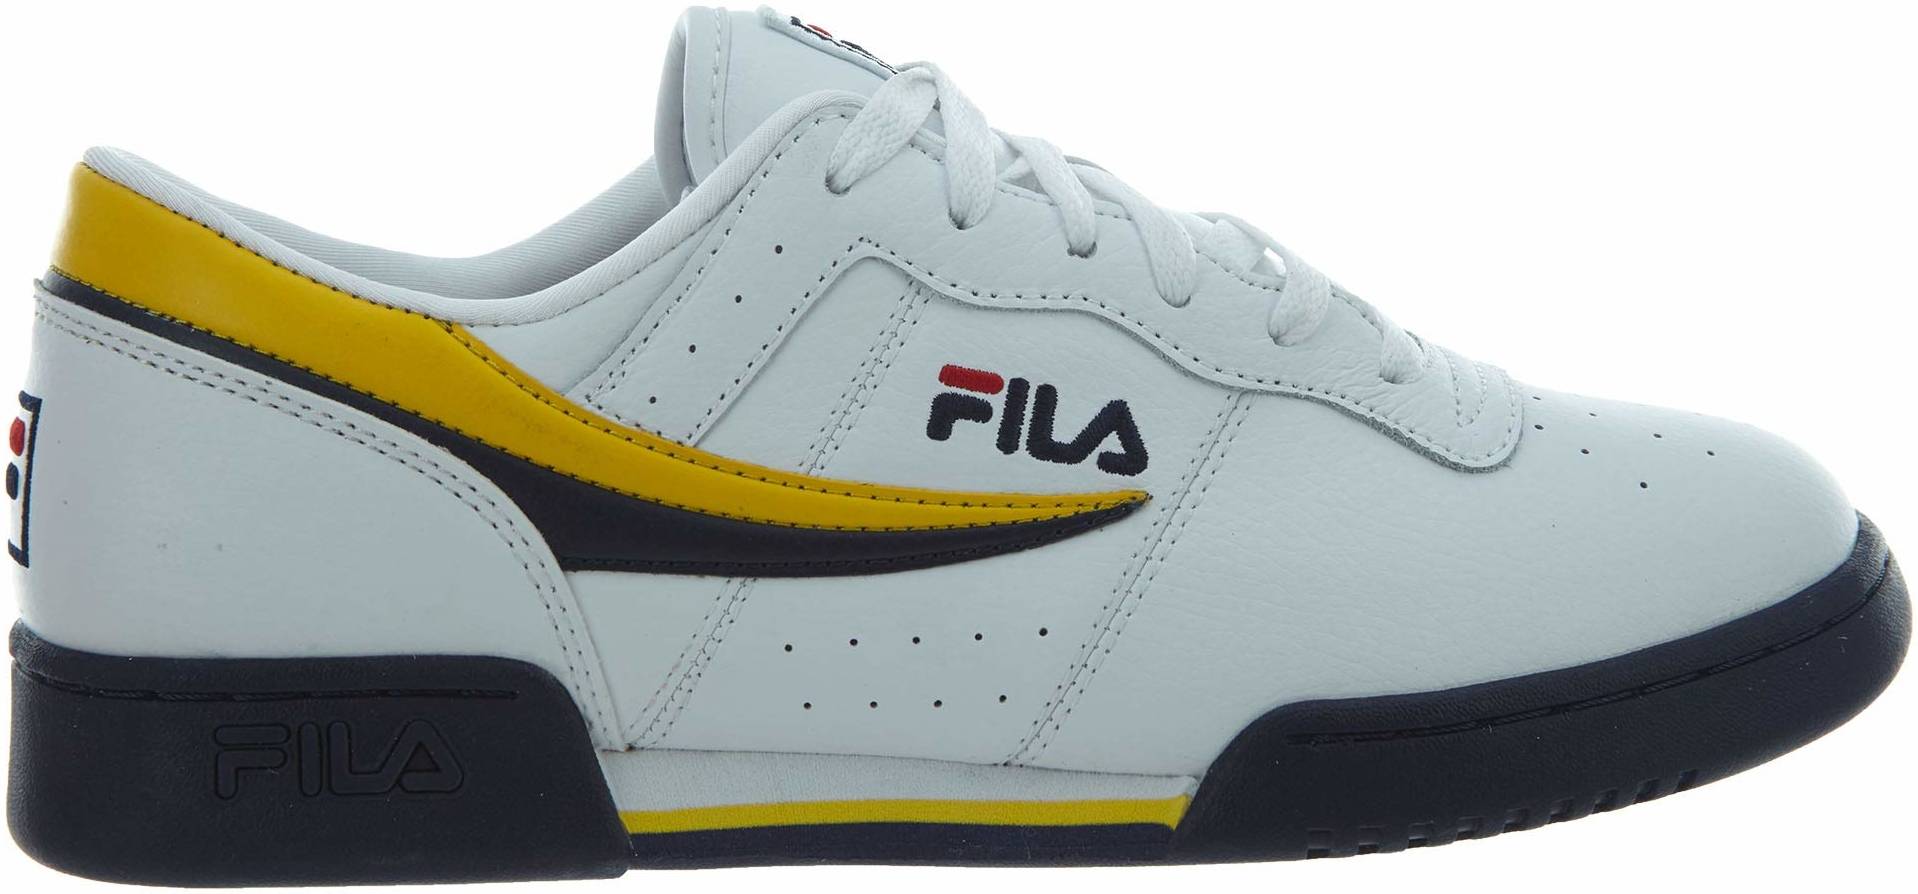 Fila Original Fitness Fila sneakers in white $21) | RunRepeat